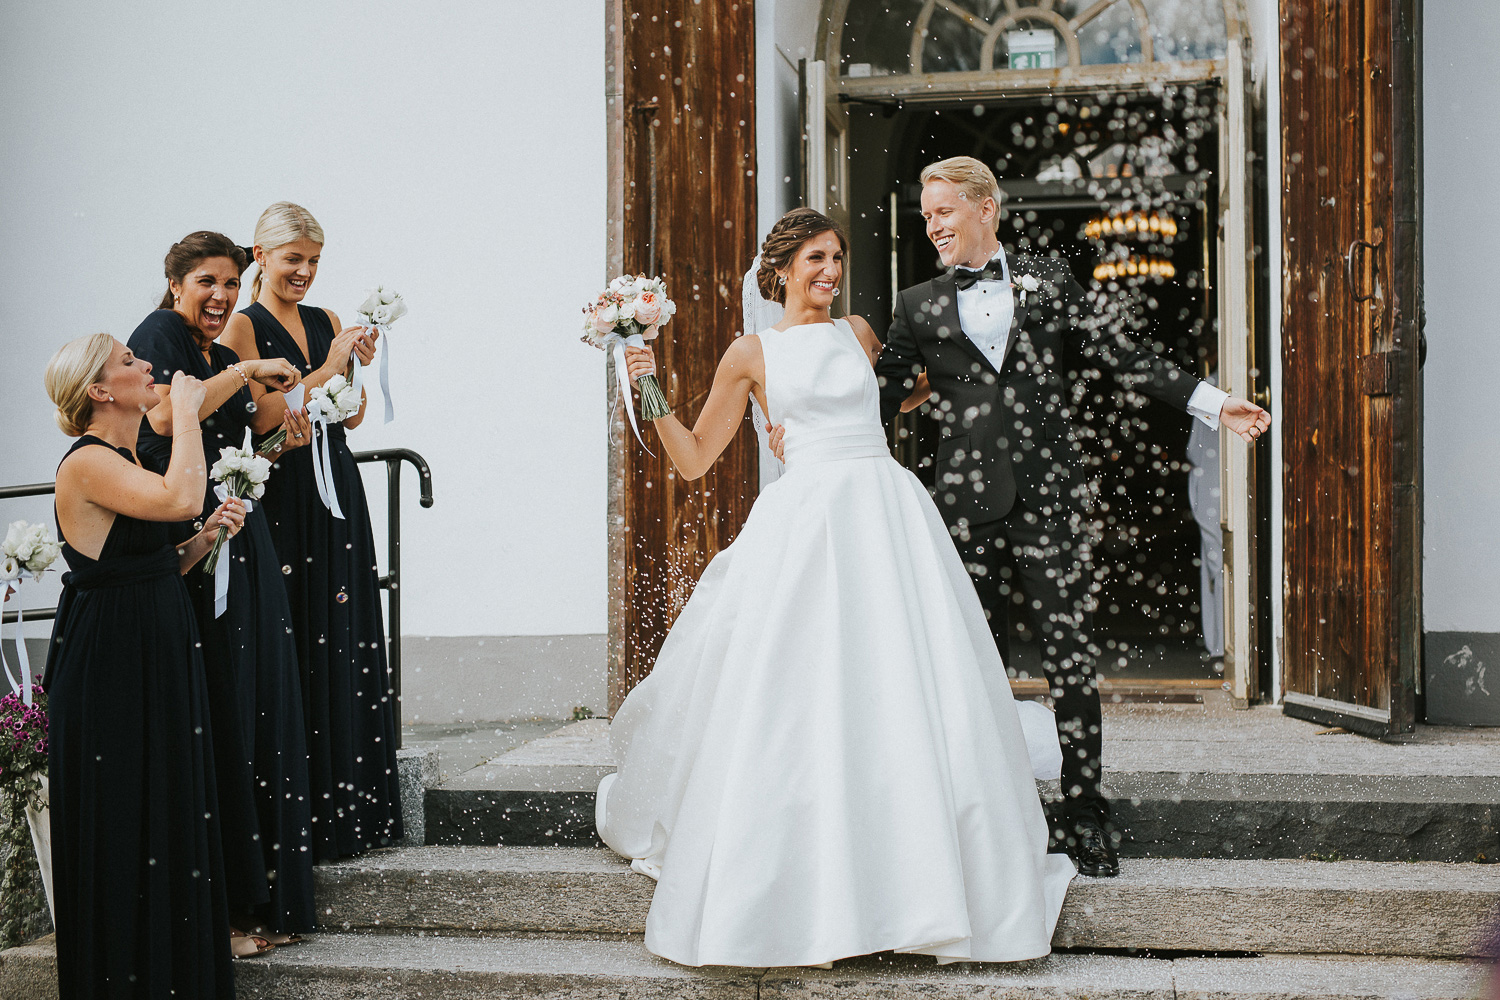 Bröllop Järvsö fotograf Yohanna Mårtensson